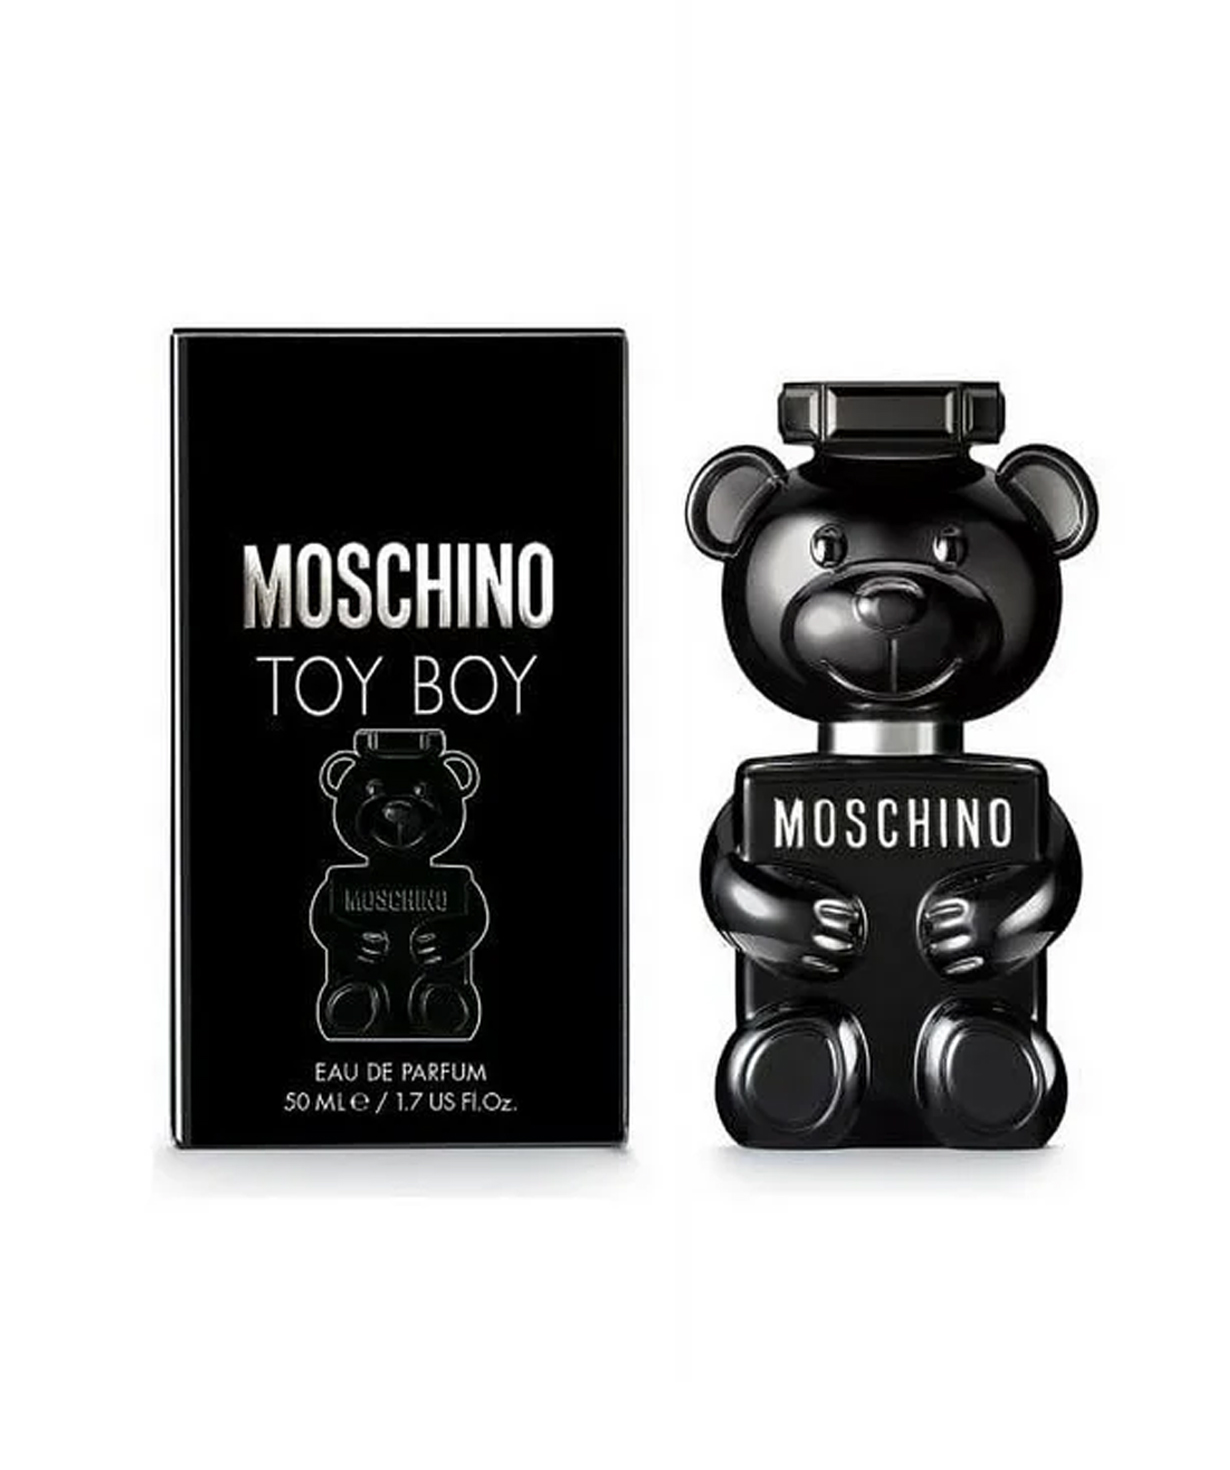 Perfume «Moschino» Toy Boy, for men, 50 ml